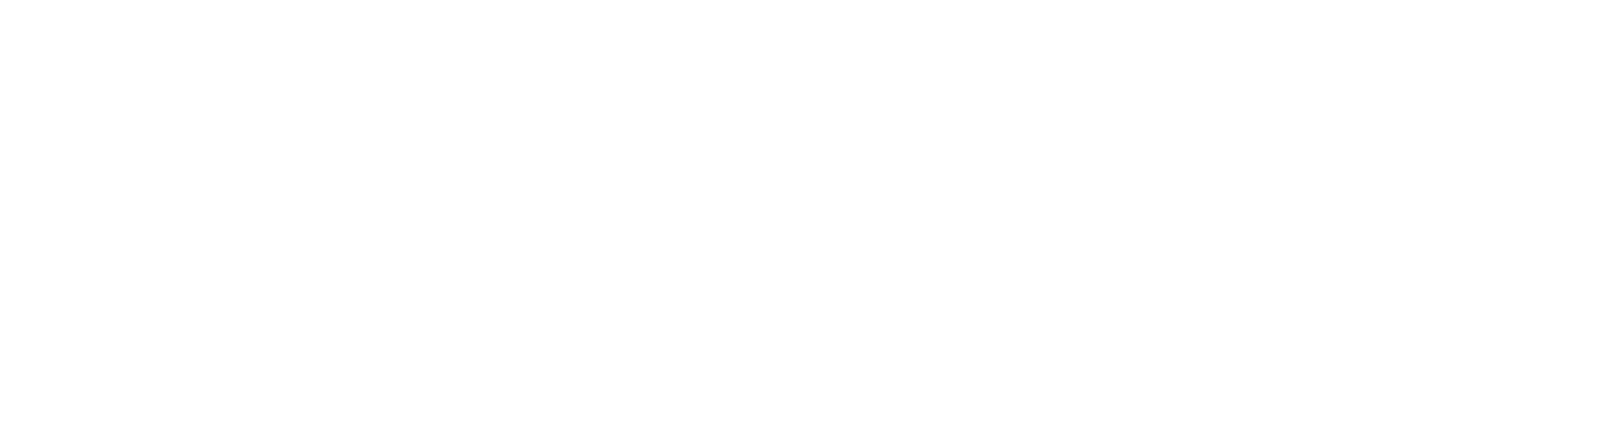 ASUS ROG Republic of Gamers Logo Men's Black T-Shirt Size S to 3XL |  eBay